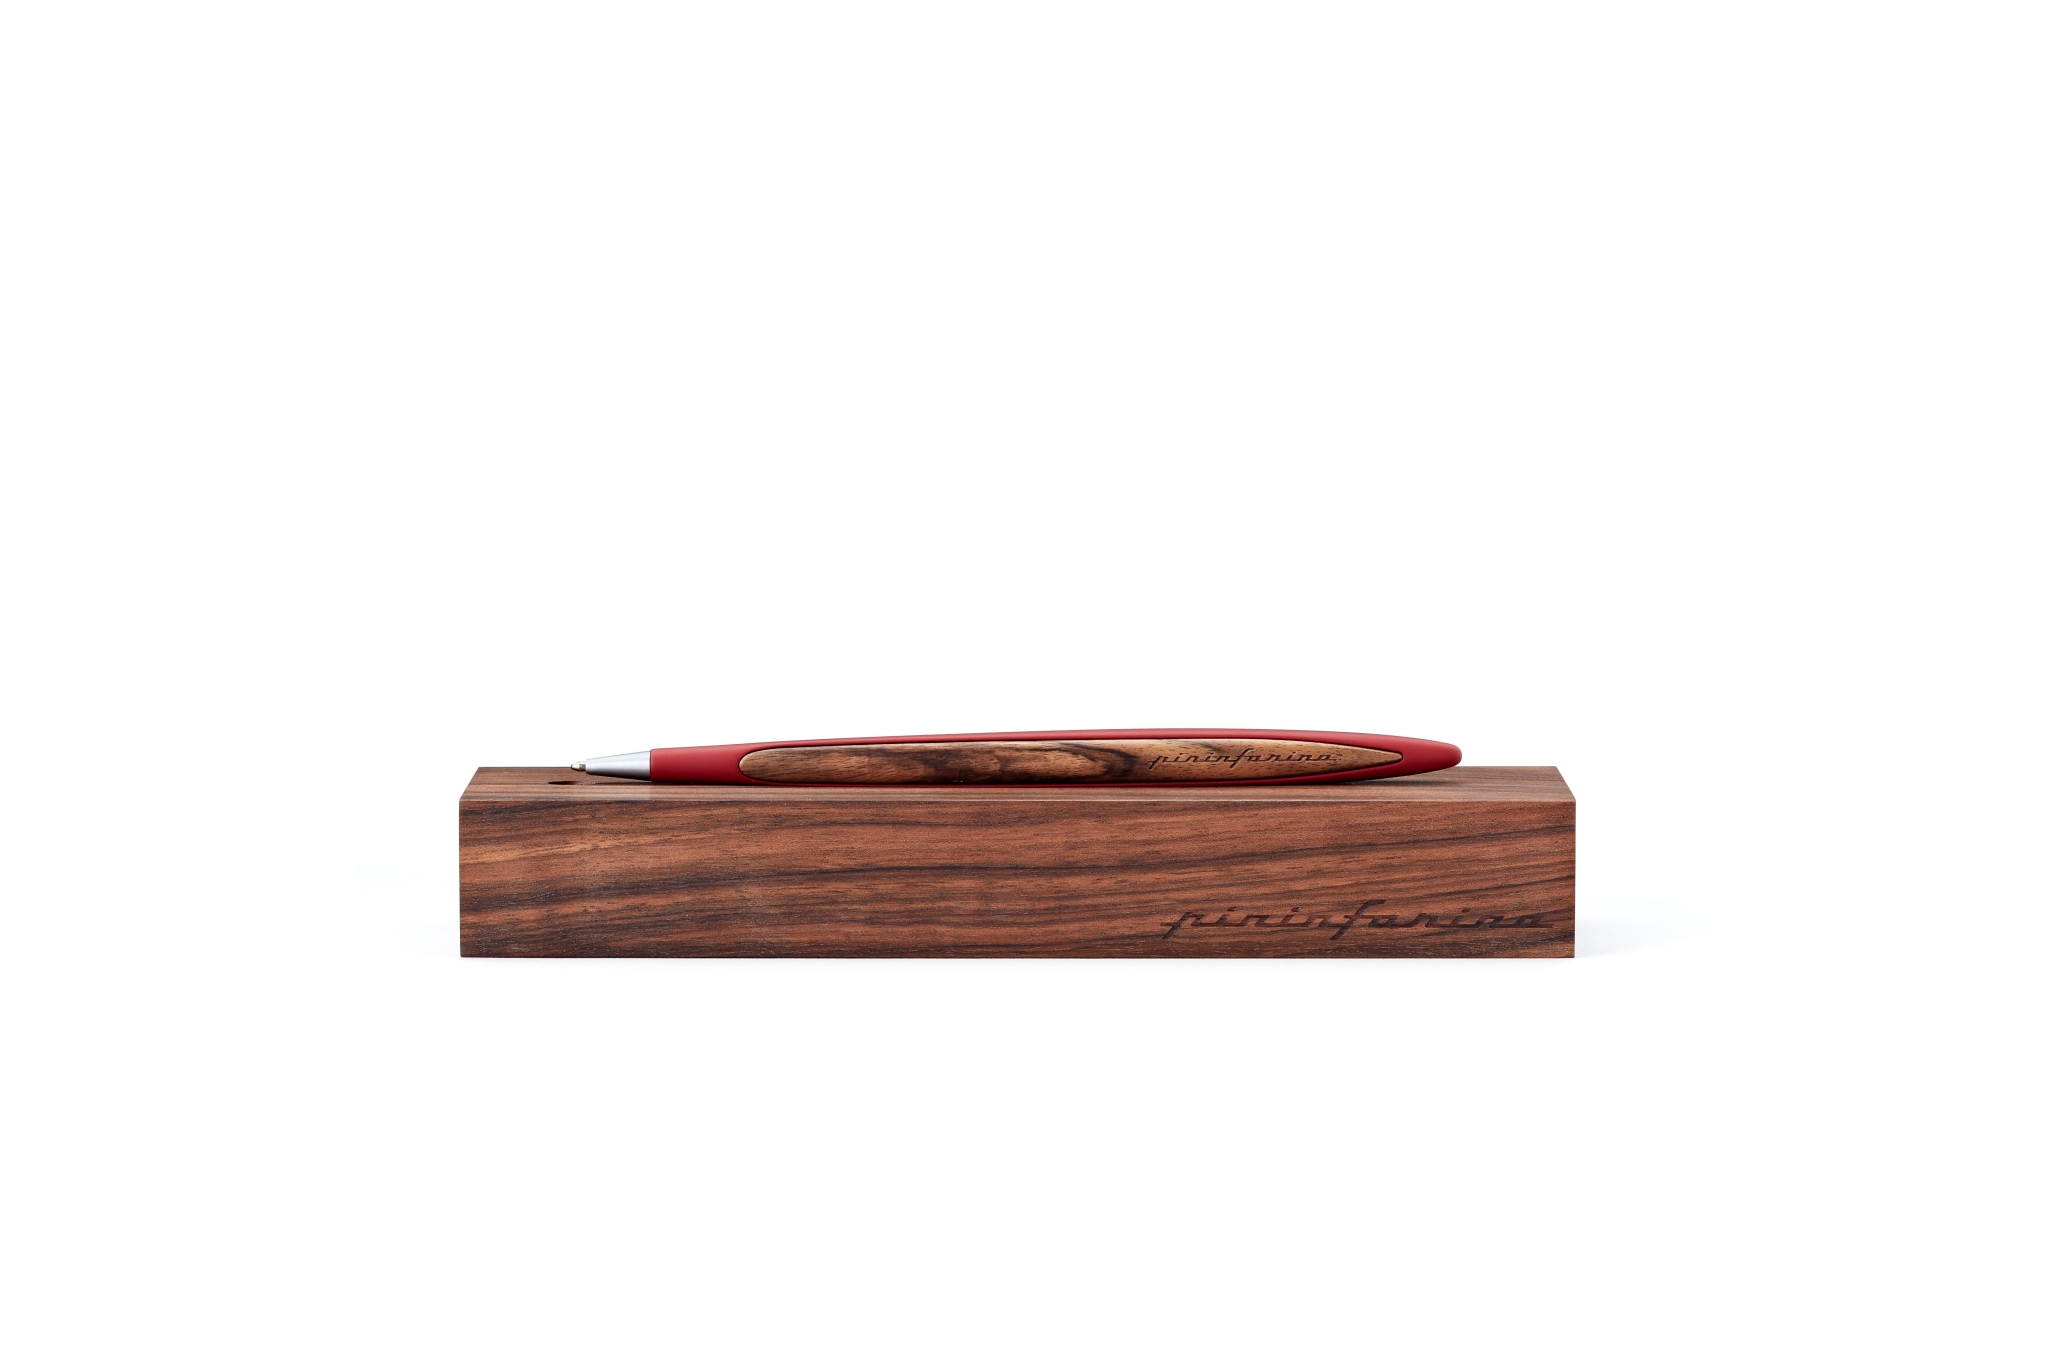 Шариковая ручка Pininfarina Cambiano Ink RED, #ff0000, грецкий орех, алюминий, дерево грецкий орех